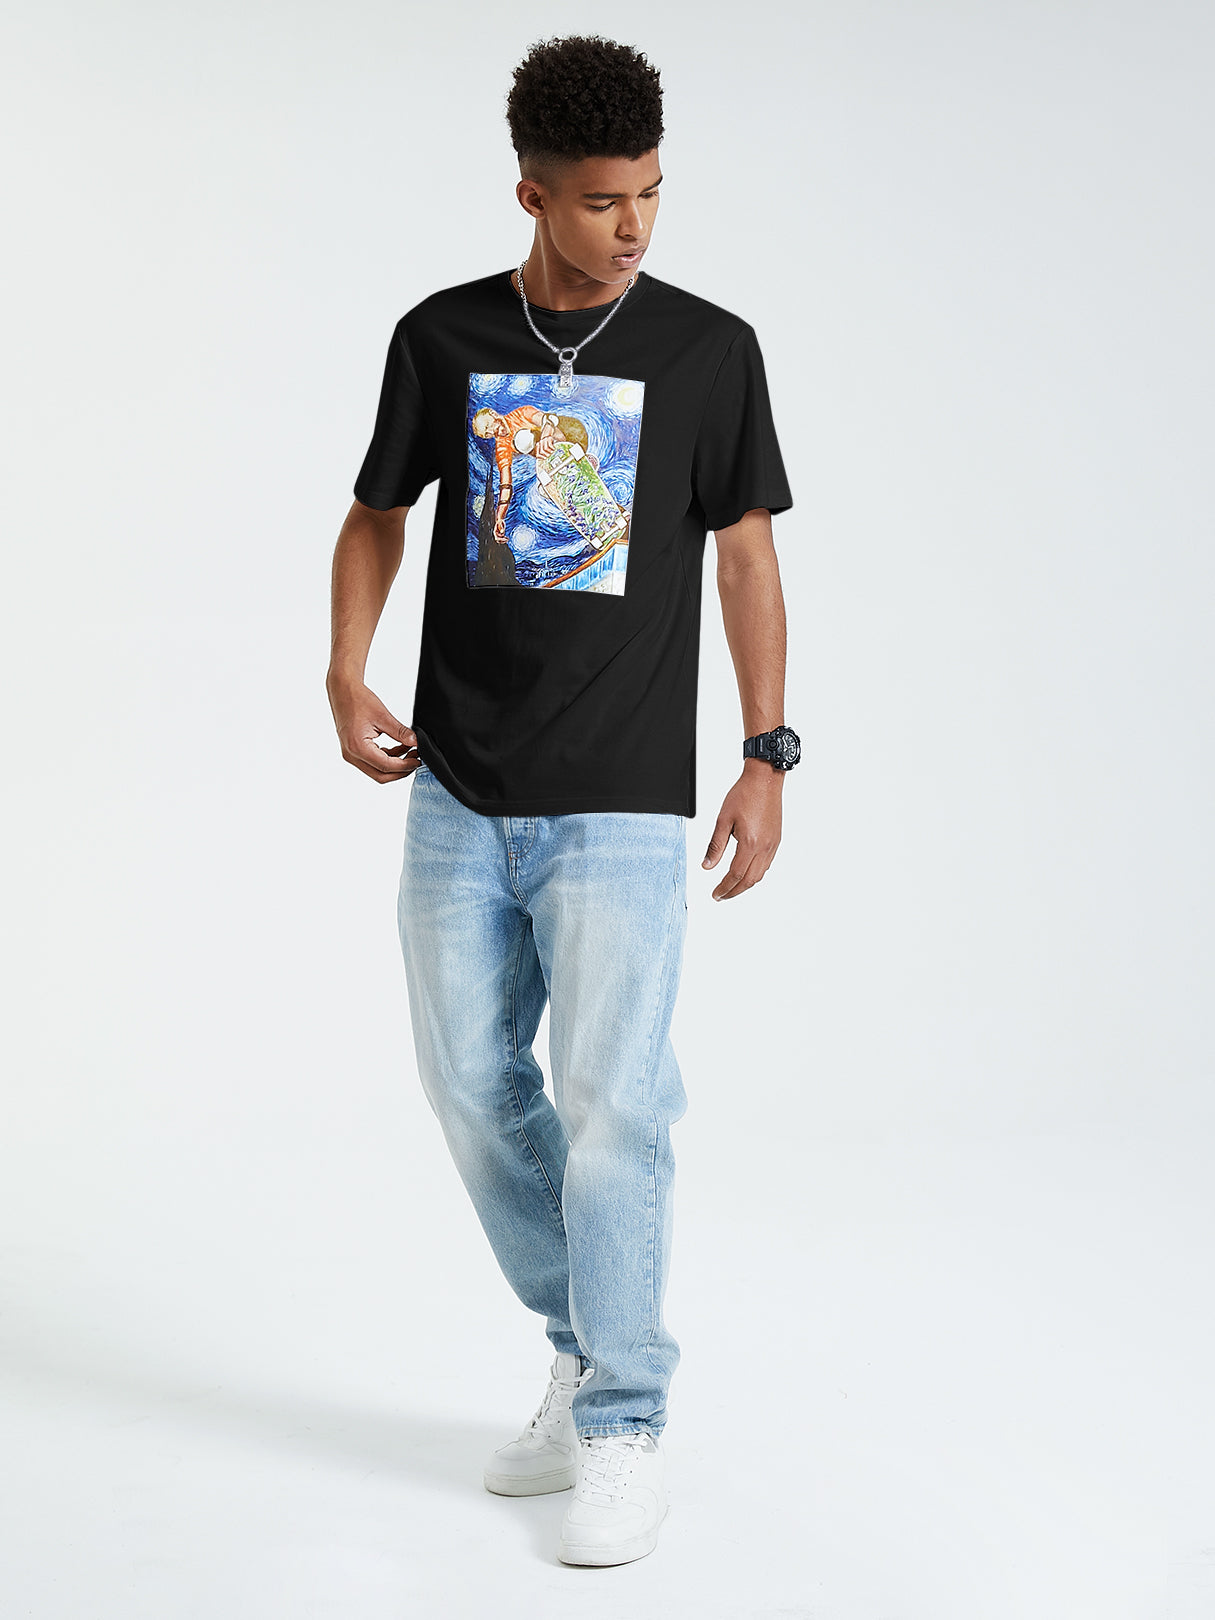 KOYYE Men Summer Casual Graphic Figure Print T-Shirt